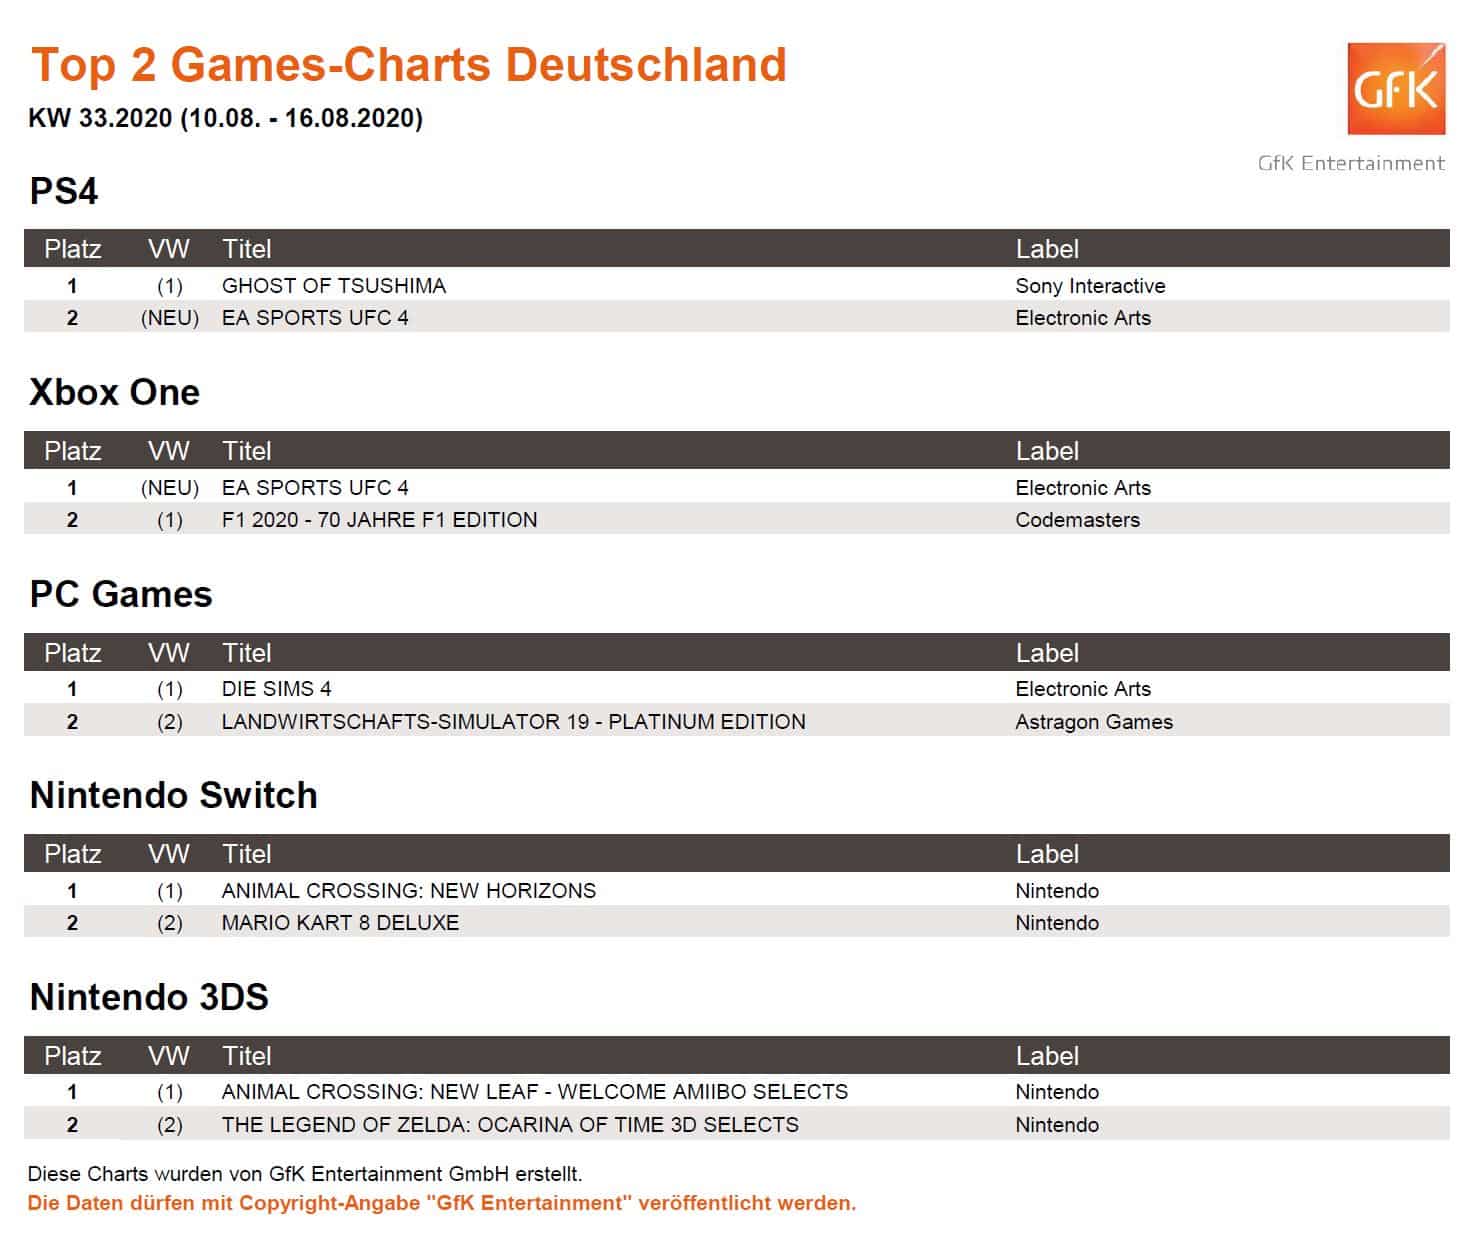 Games Charts Ea Sports Ufc 4 Gewinnt Kampf Um Xbox One Spitze Gaming Grounds De